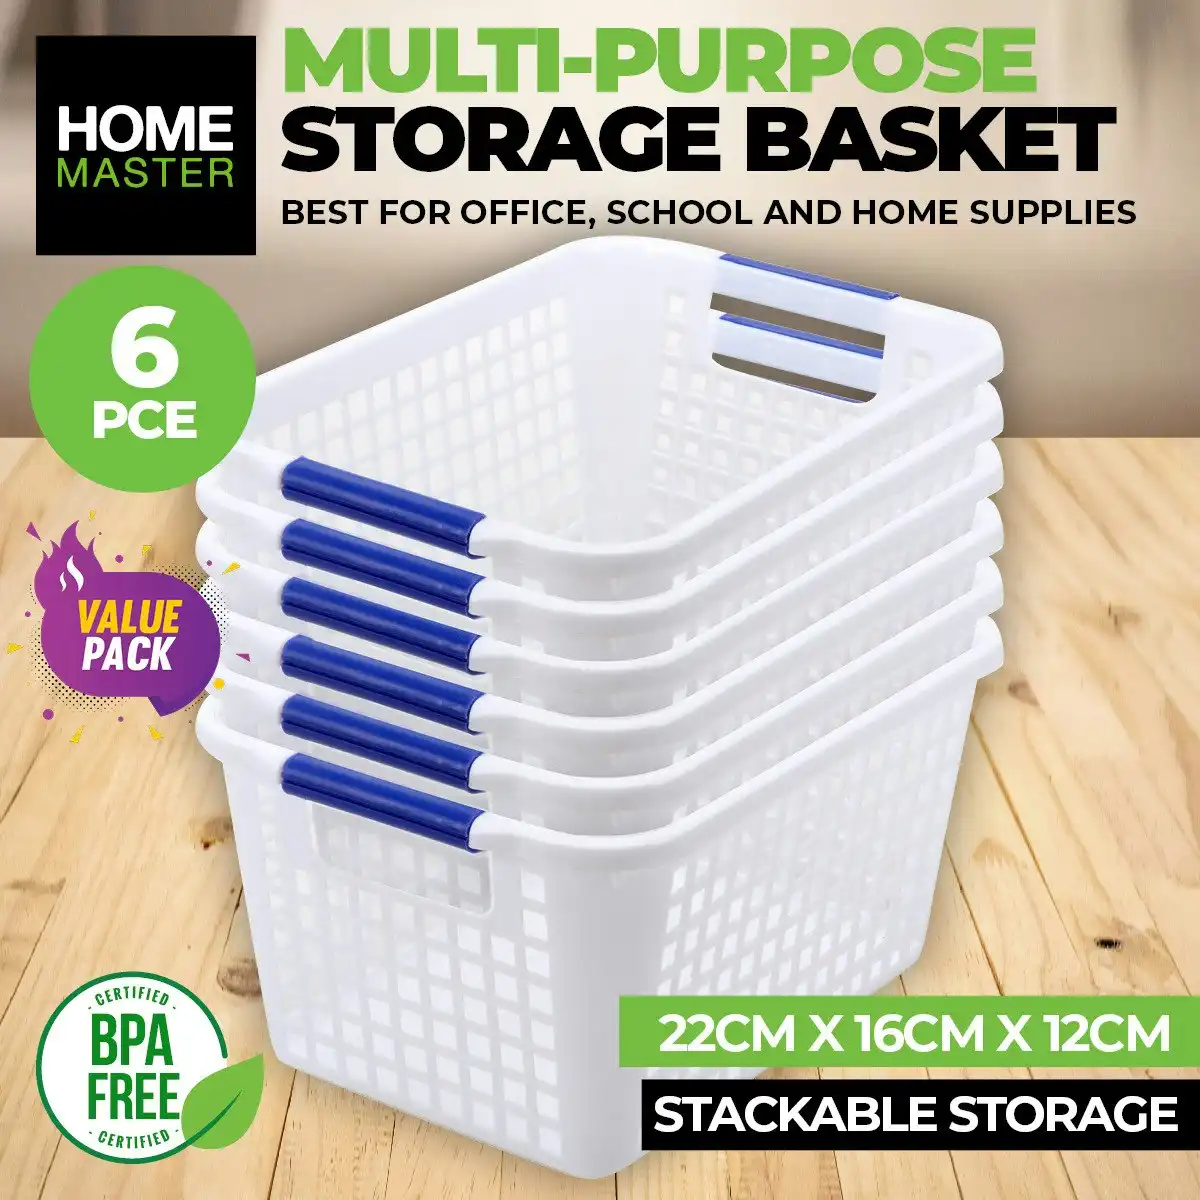 Home Master 6PCE Storage Baskets Multi Purpose Space Saving 22cm